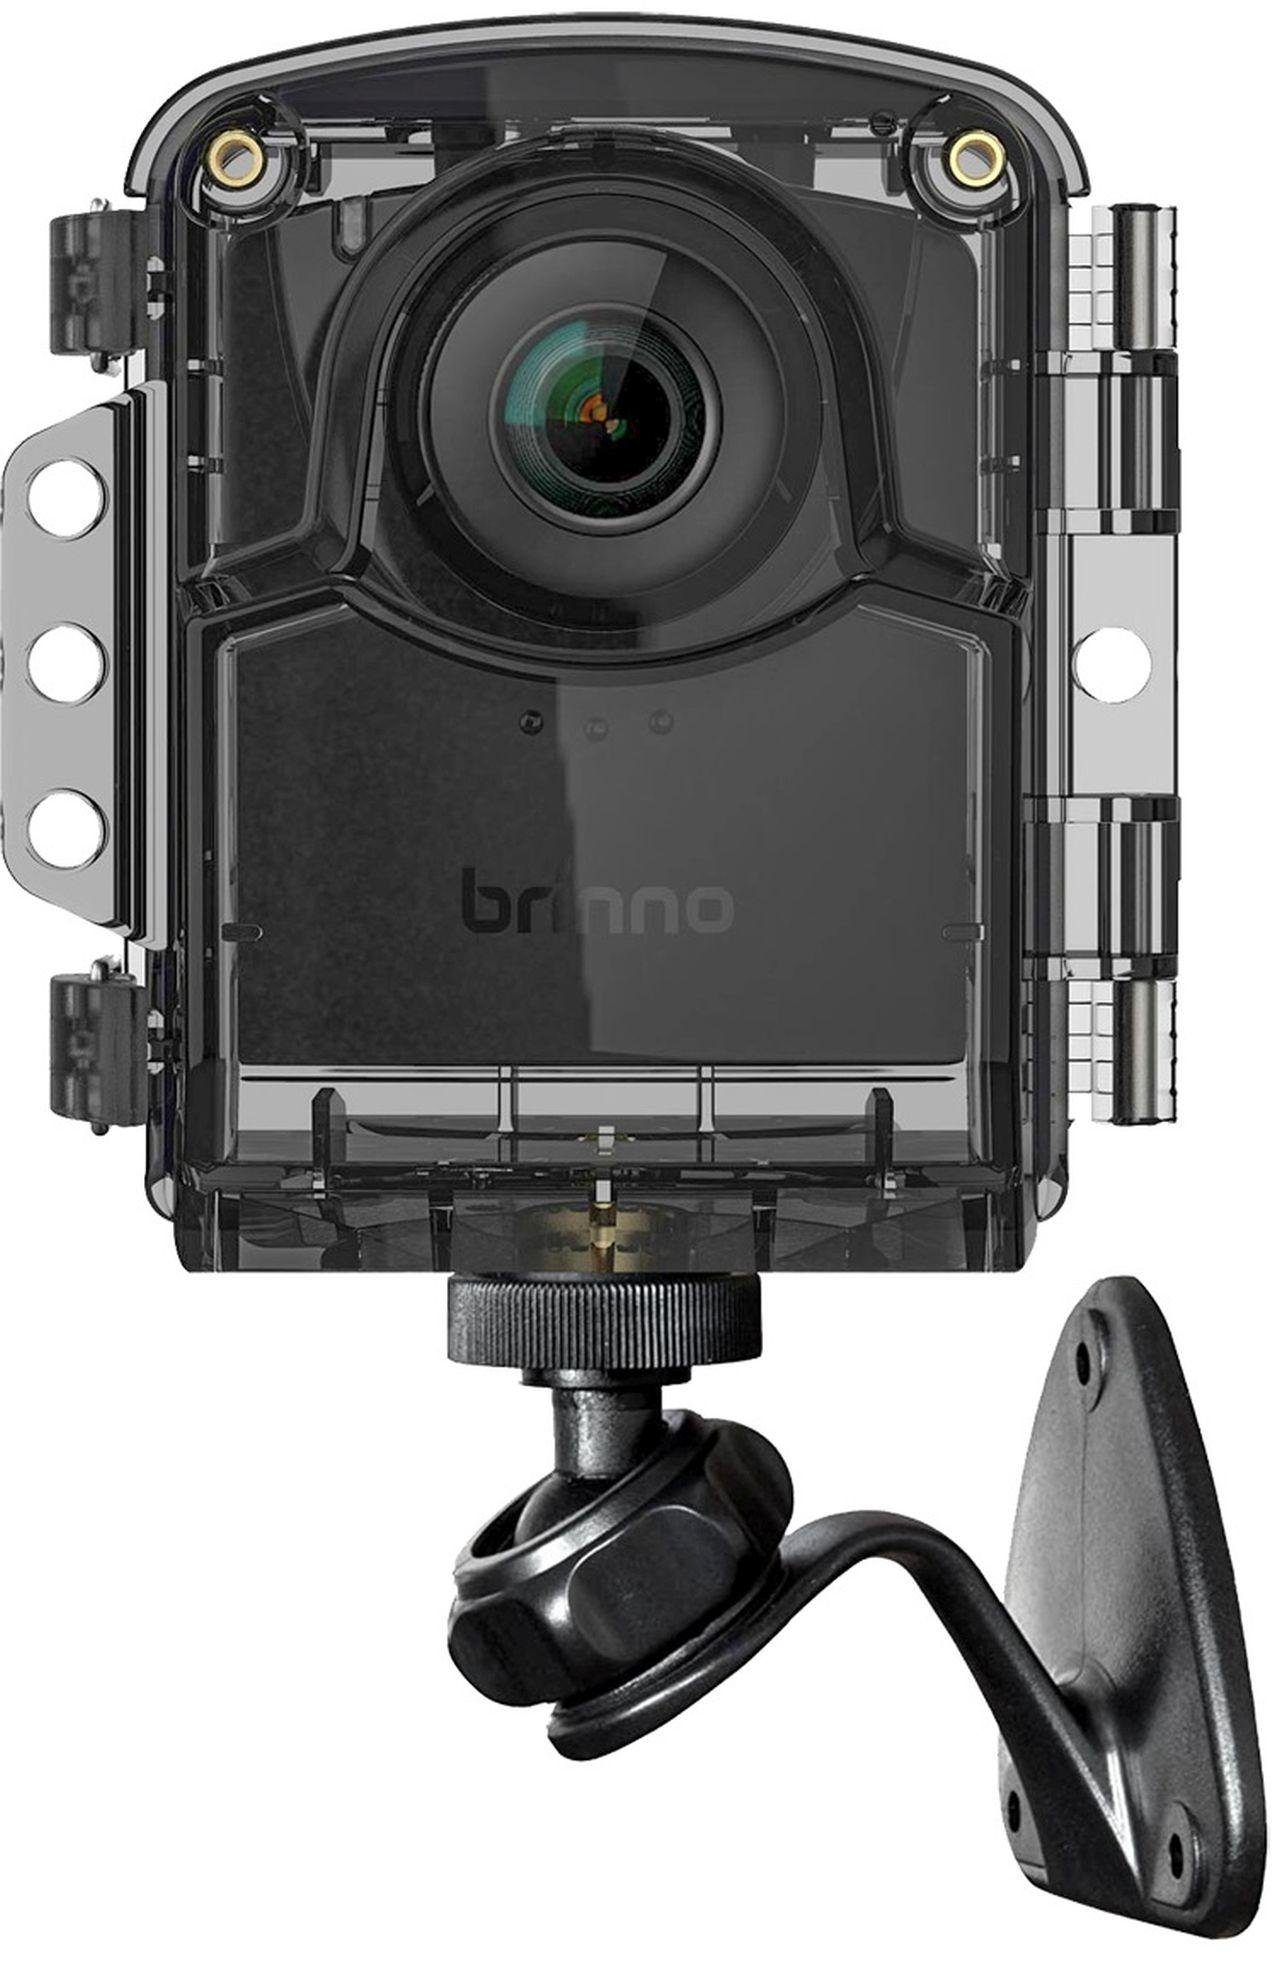 HD TLC2020M Full brinno EMPOWER HDR Kompaktkamera Bun Zeitraffer-Kamera